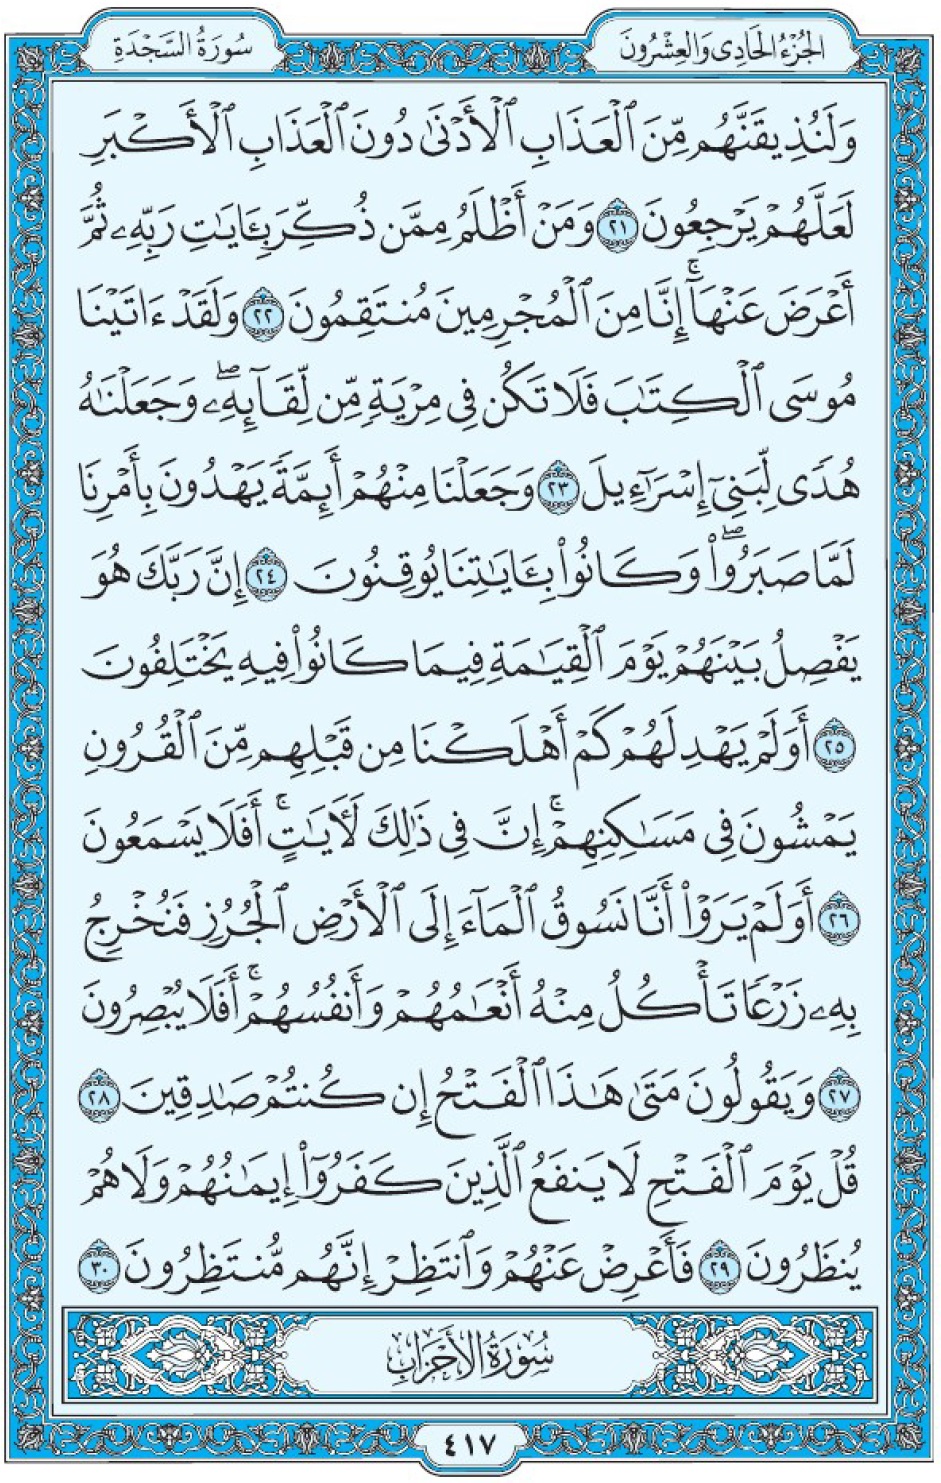 Коран Мединский мусхаф страница 417, Ас-Саджда, аят 21-30